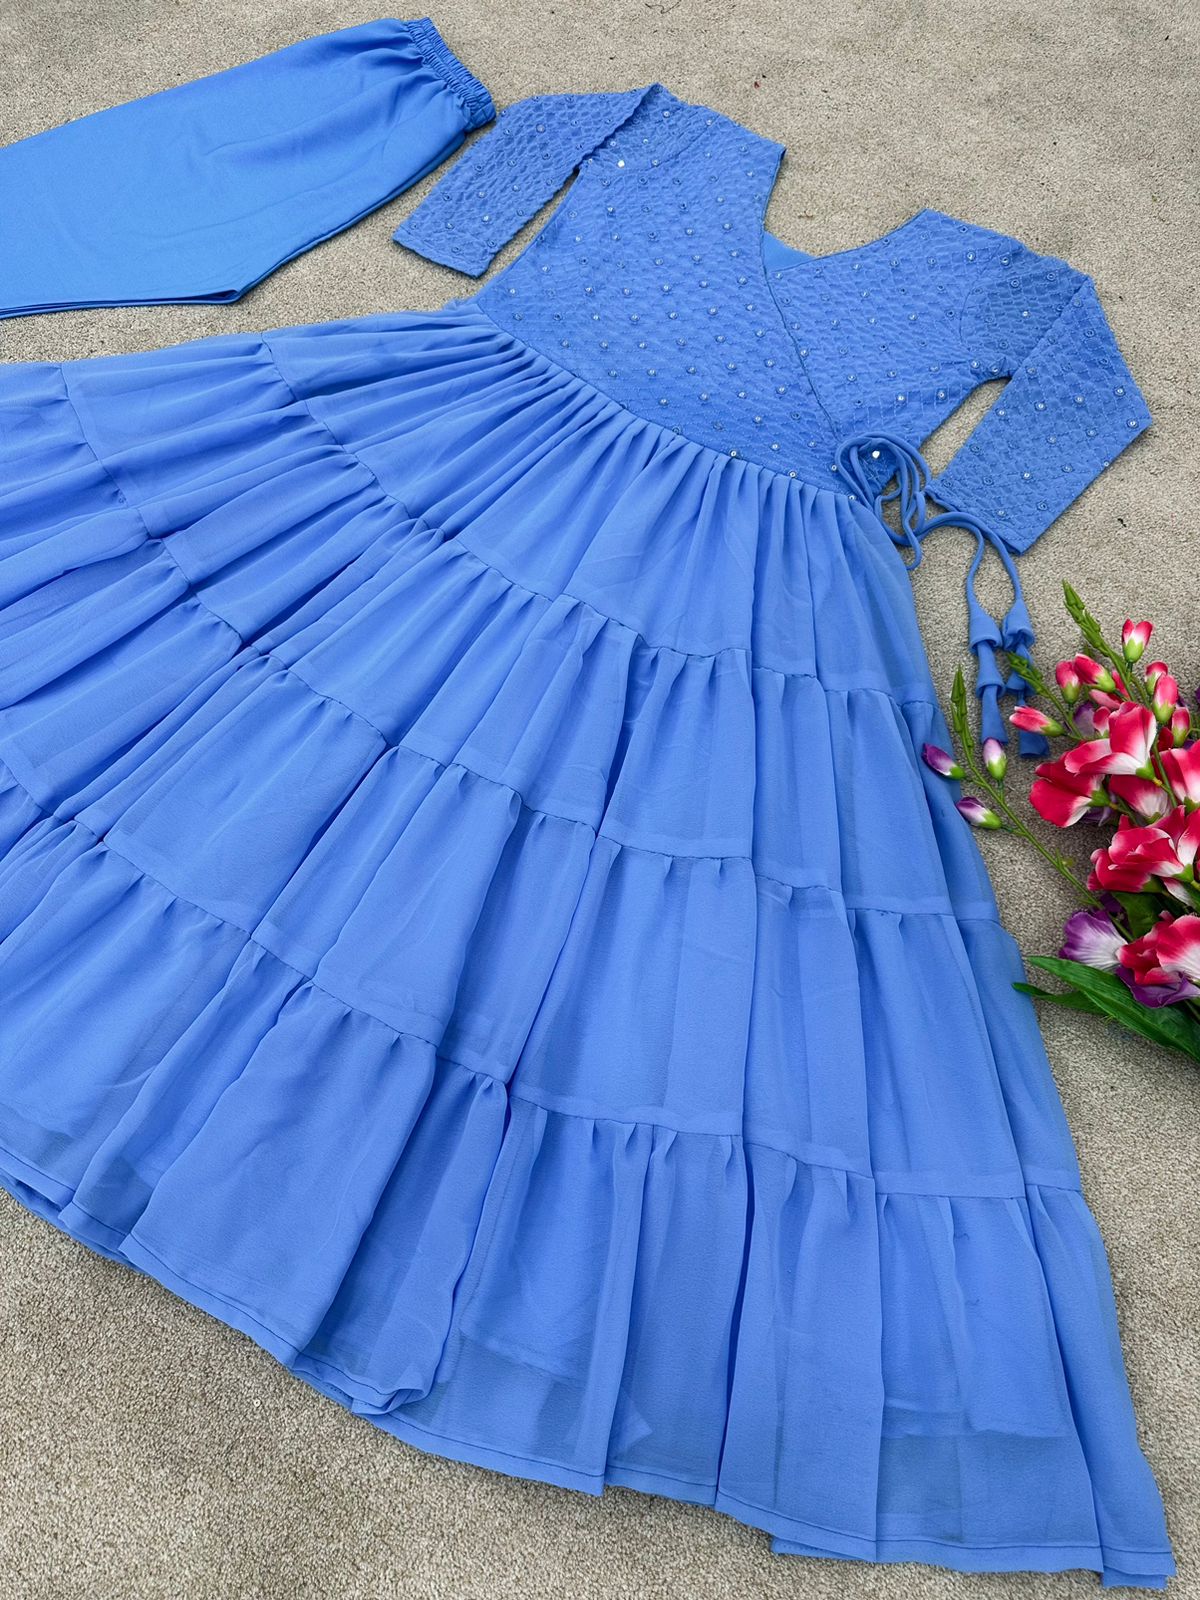 Kriti Sanon Style Sky Blue Color Ruffle Gown